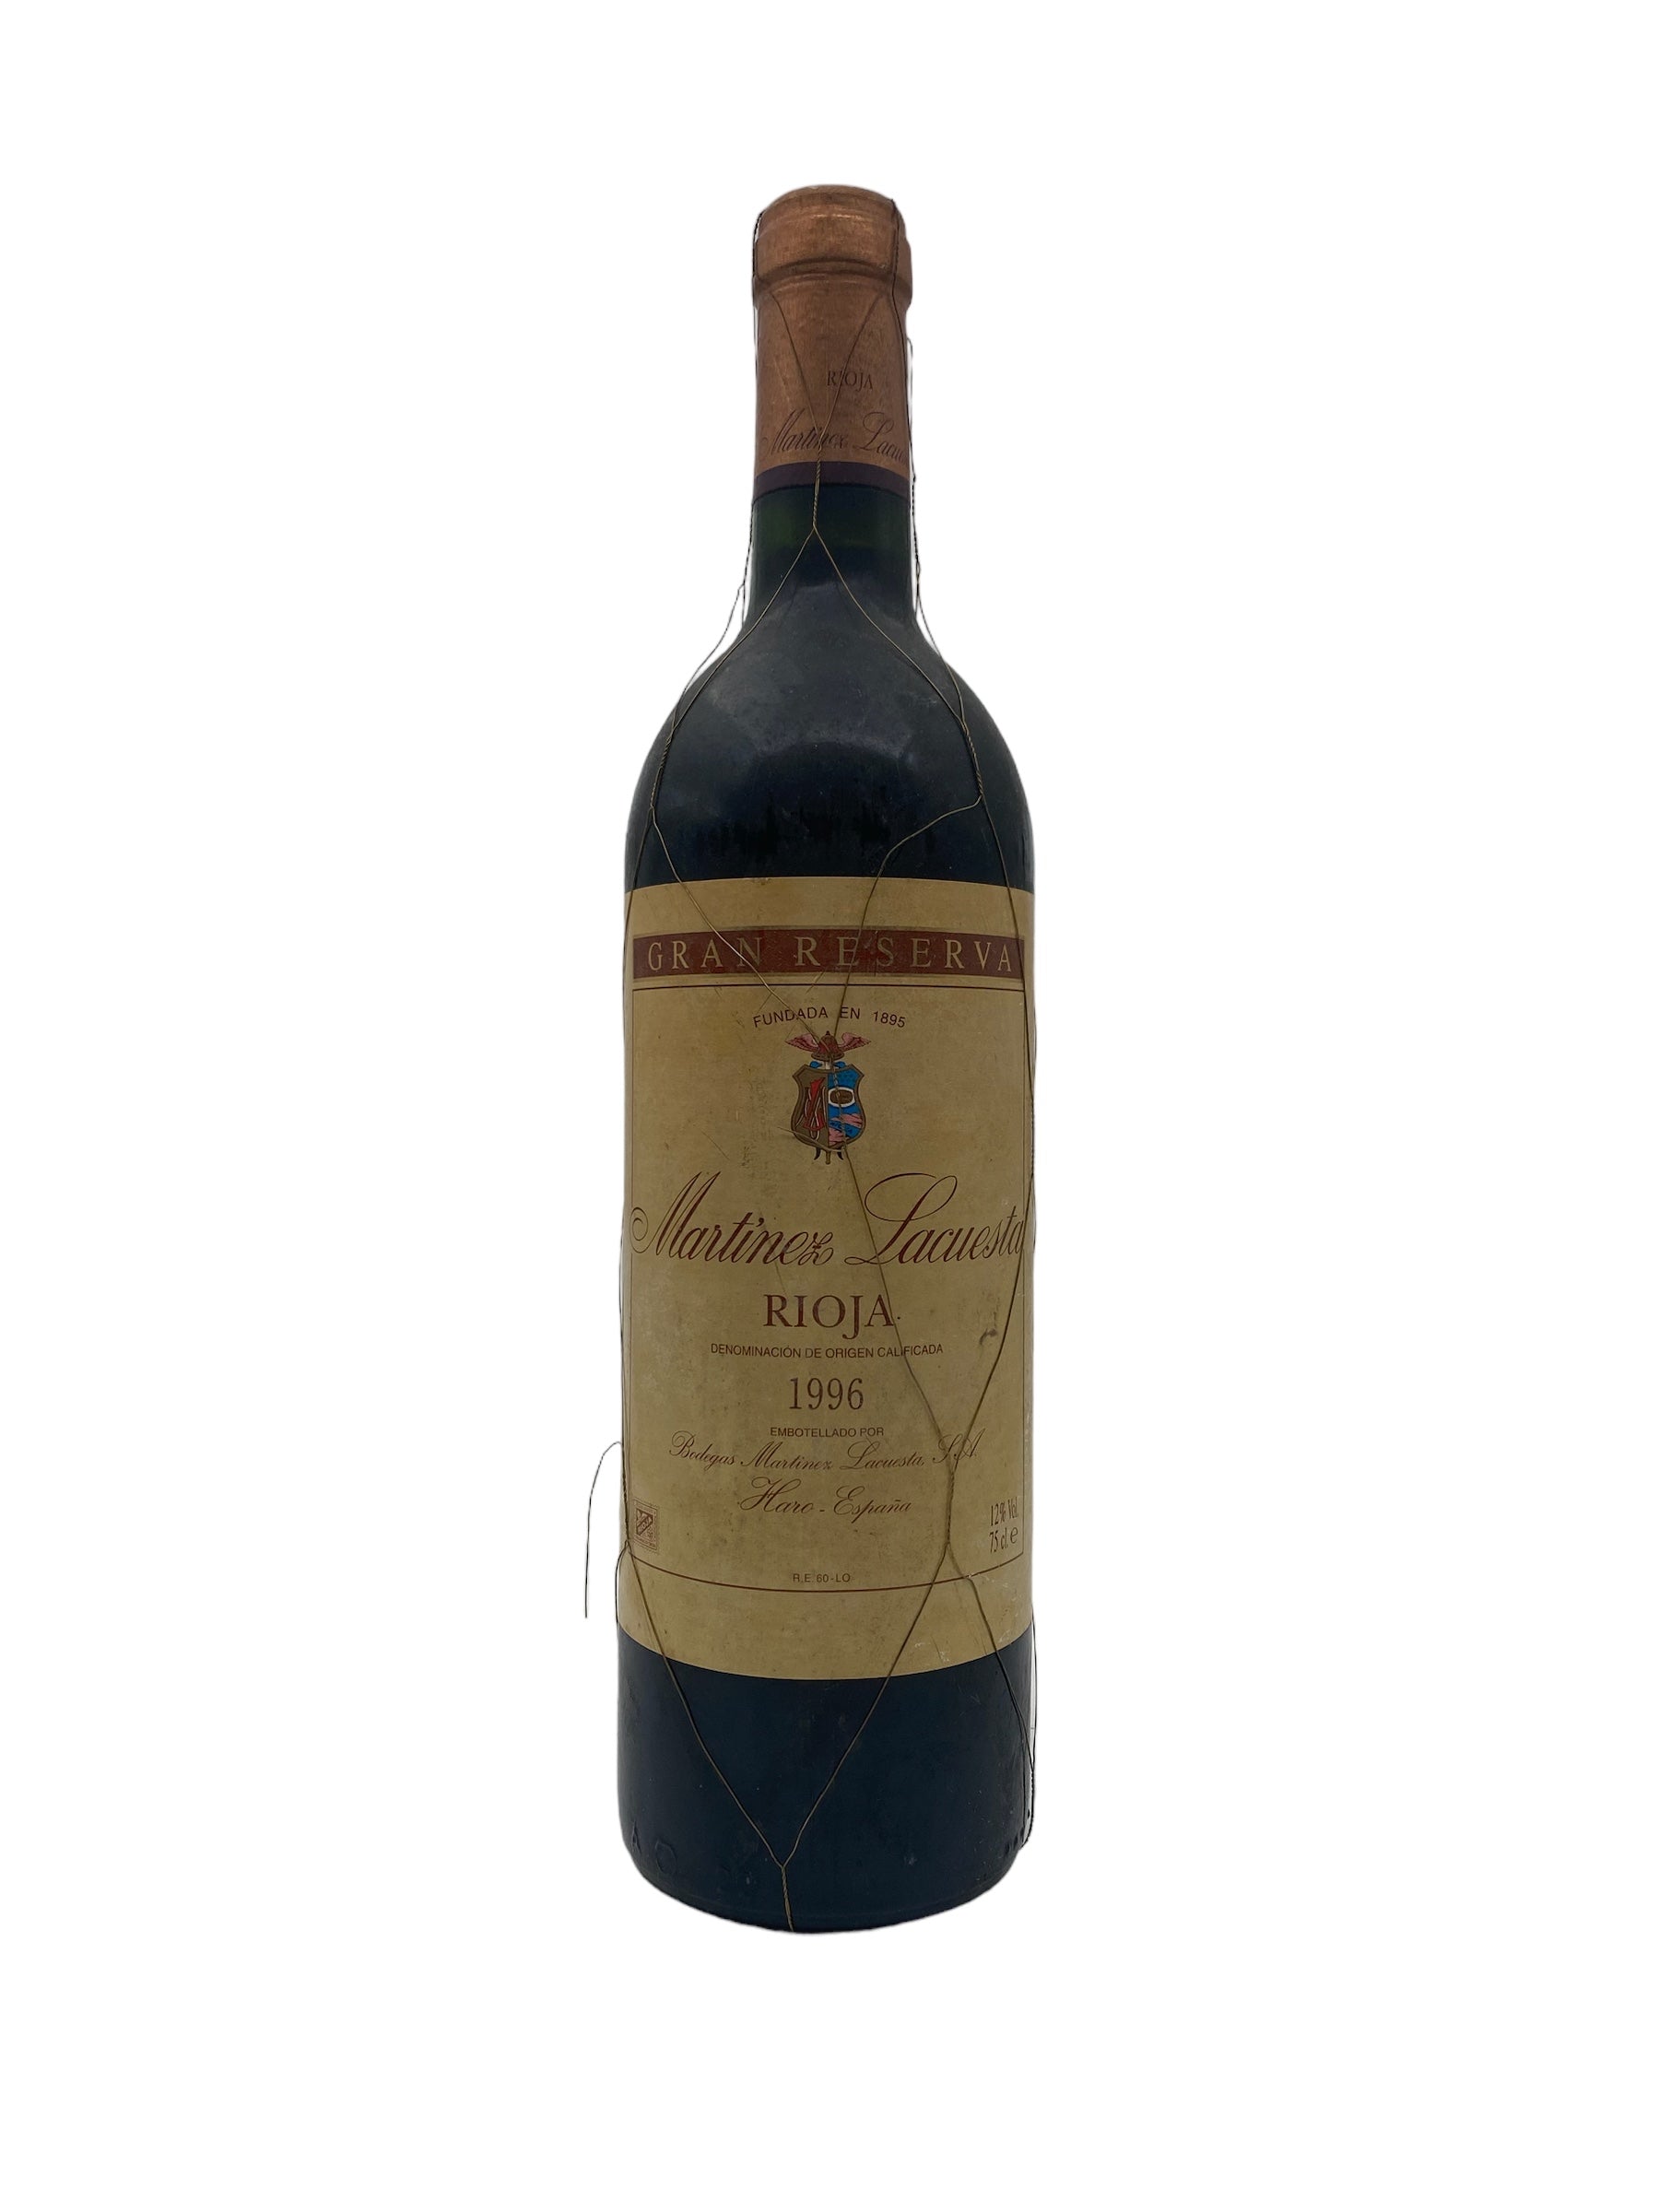 Se Rioja Martínez Lacuesta 1996 Gran Reserva hos Bottleswithhistory.dk